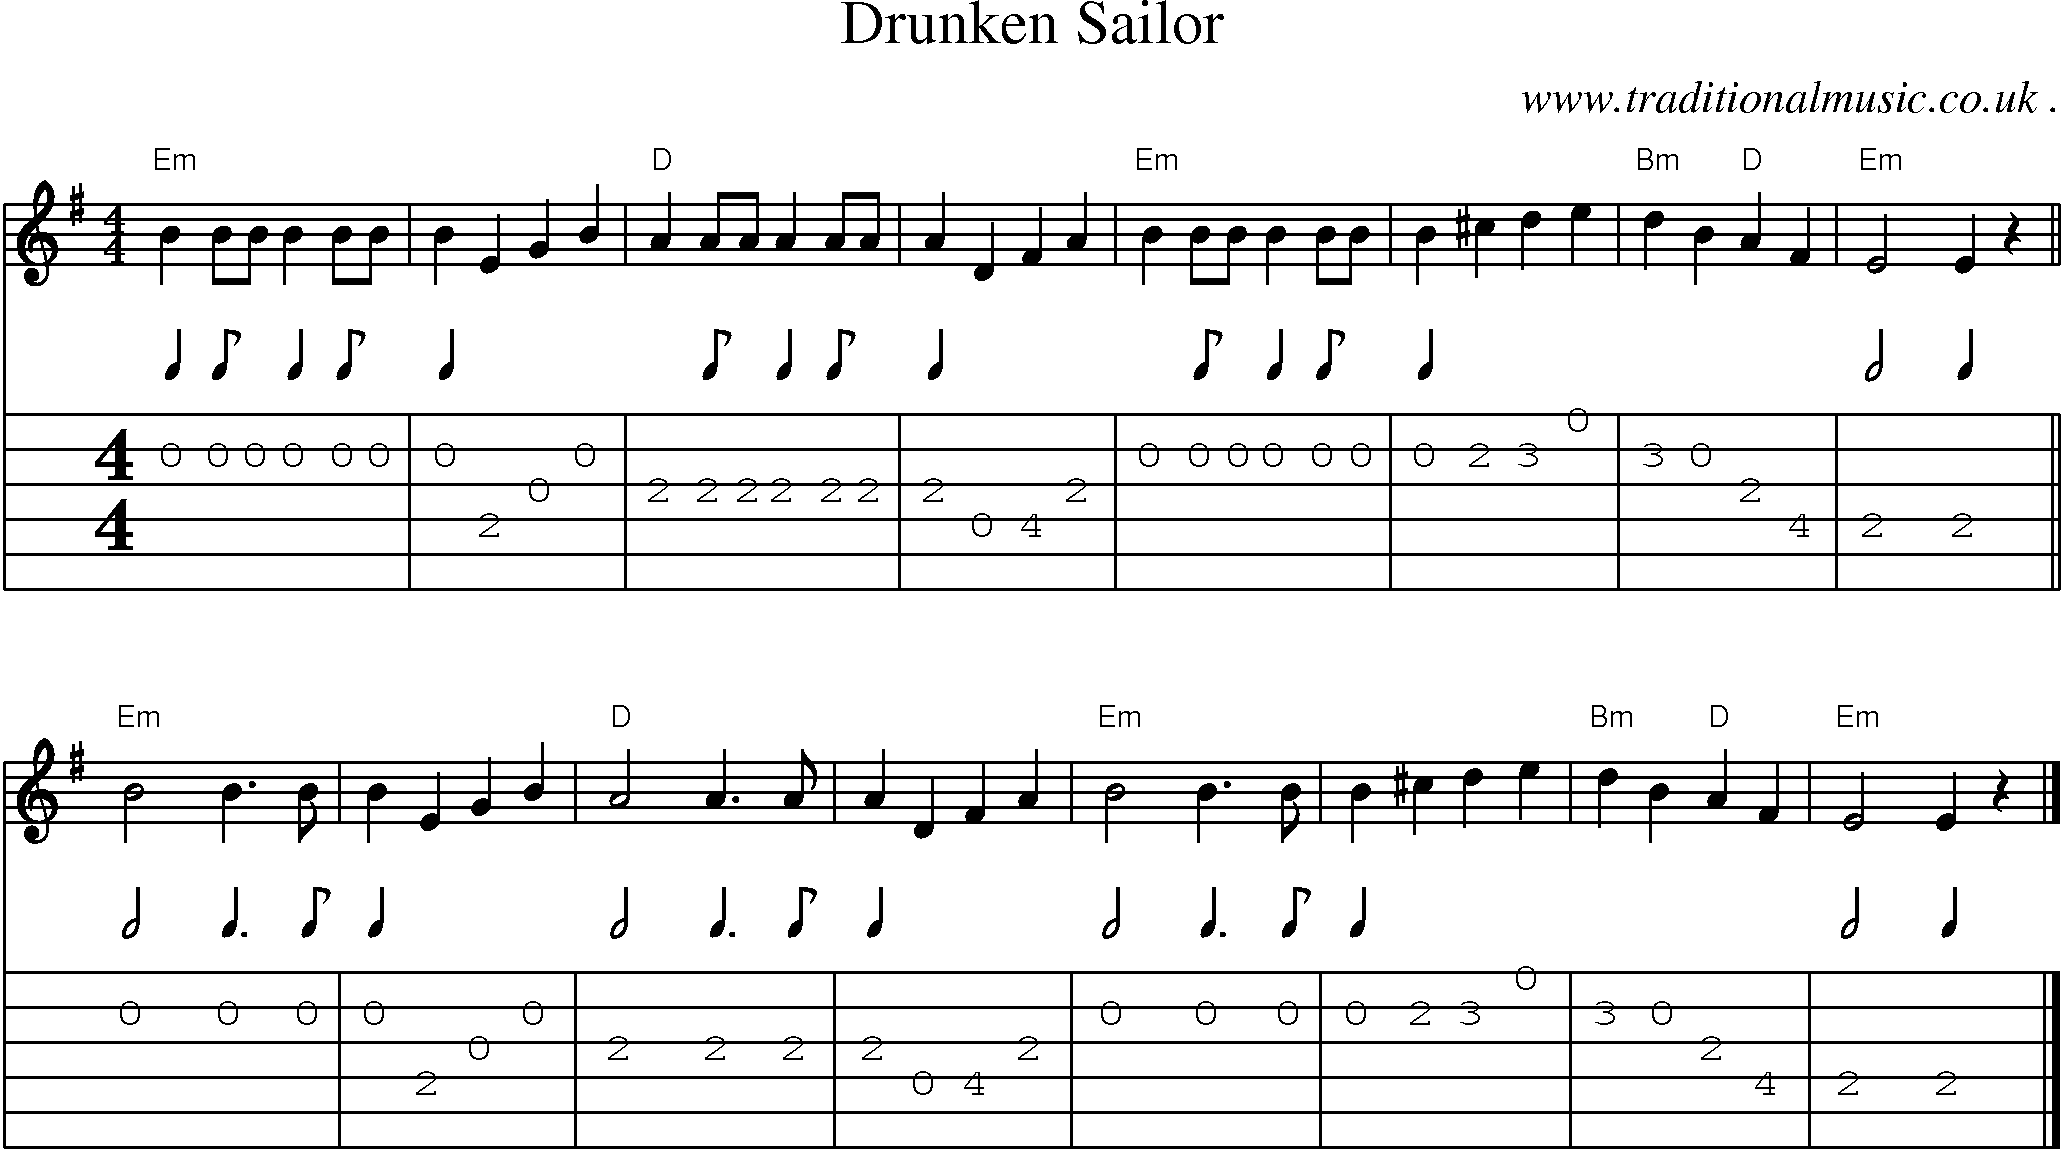 Music Score and Guitar Tabs for Drunken Sailor